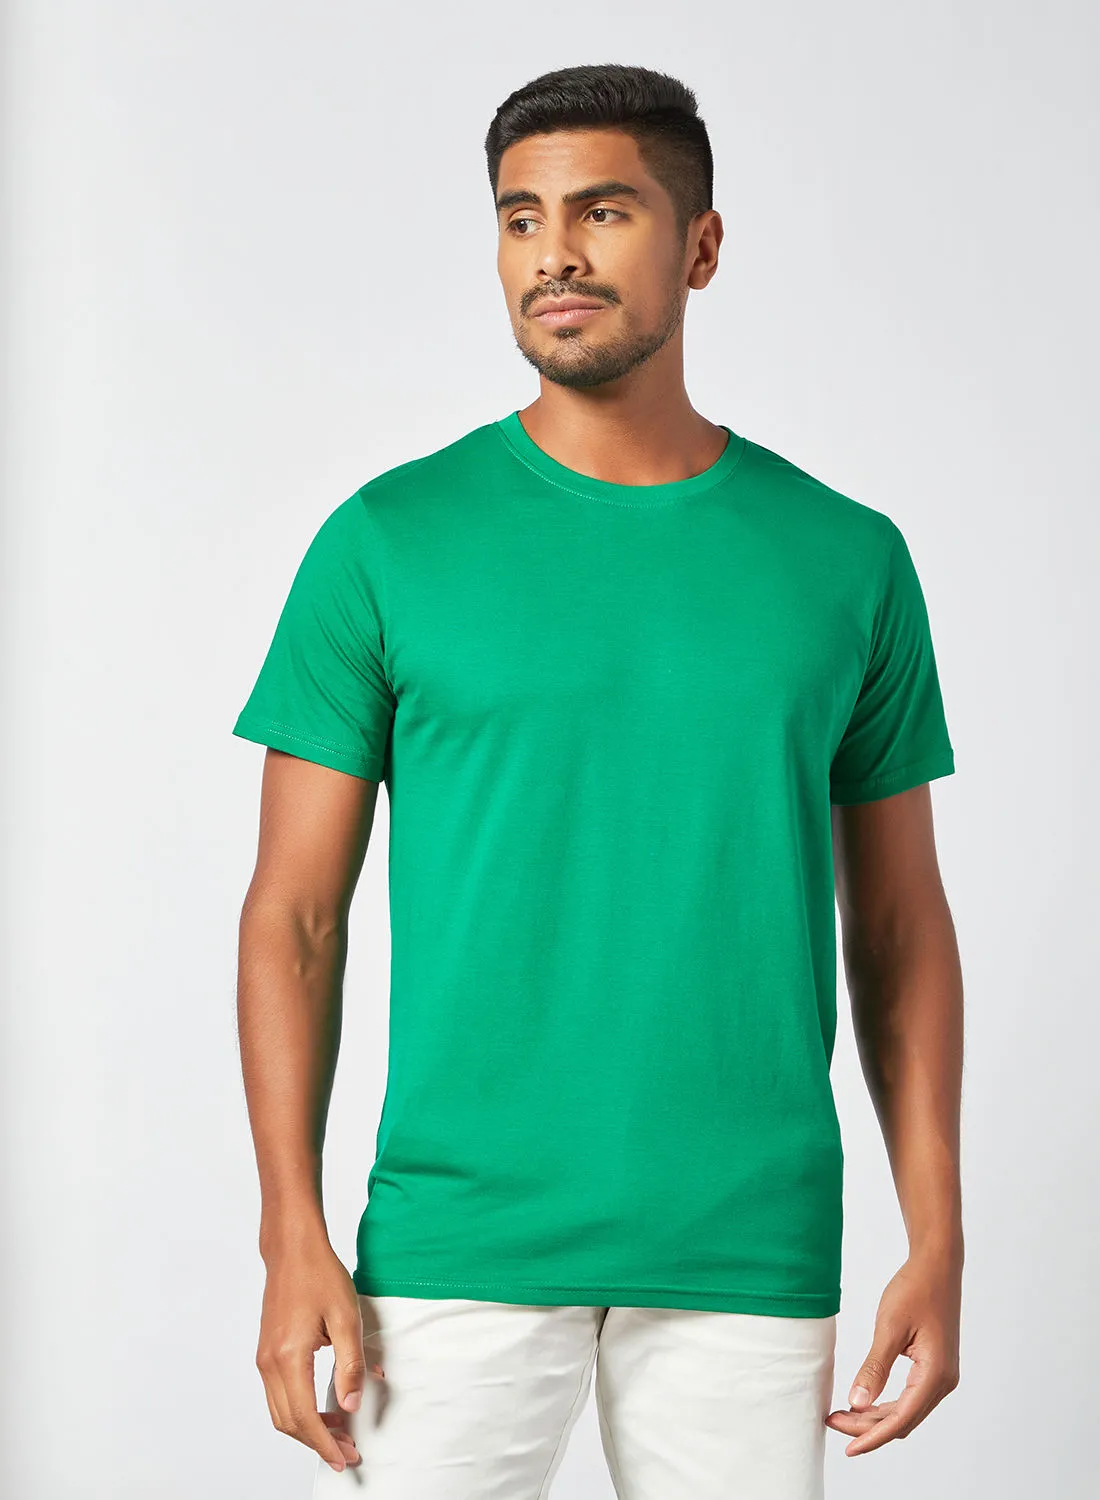 STATE 8 Basic Crew Neck T-Shirt أخضر